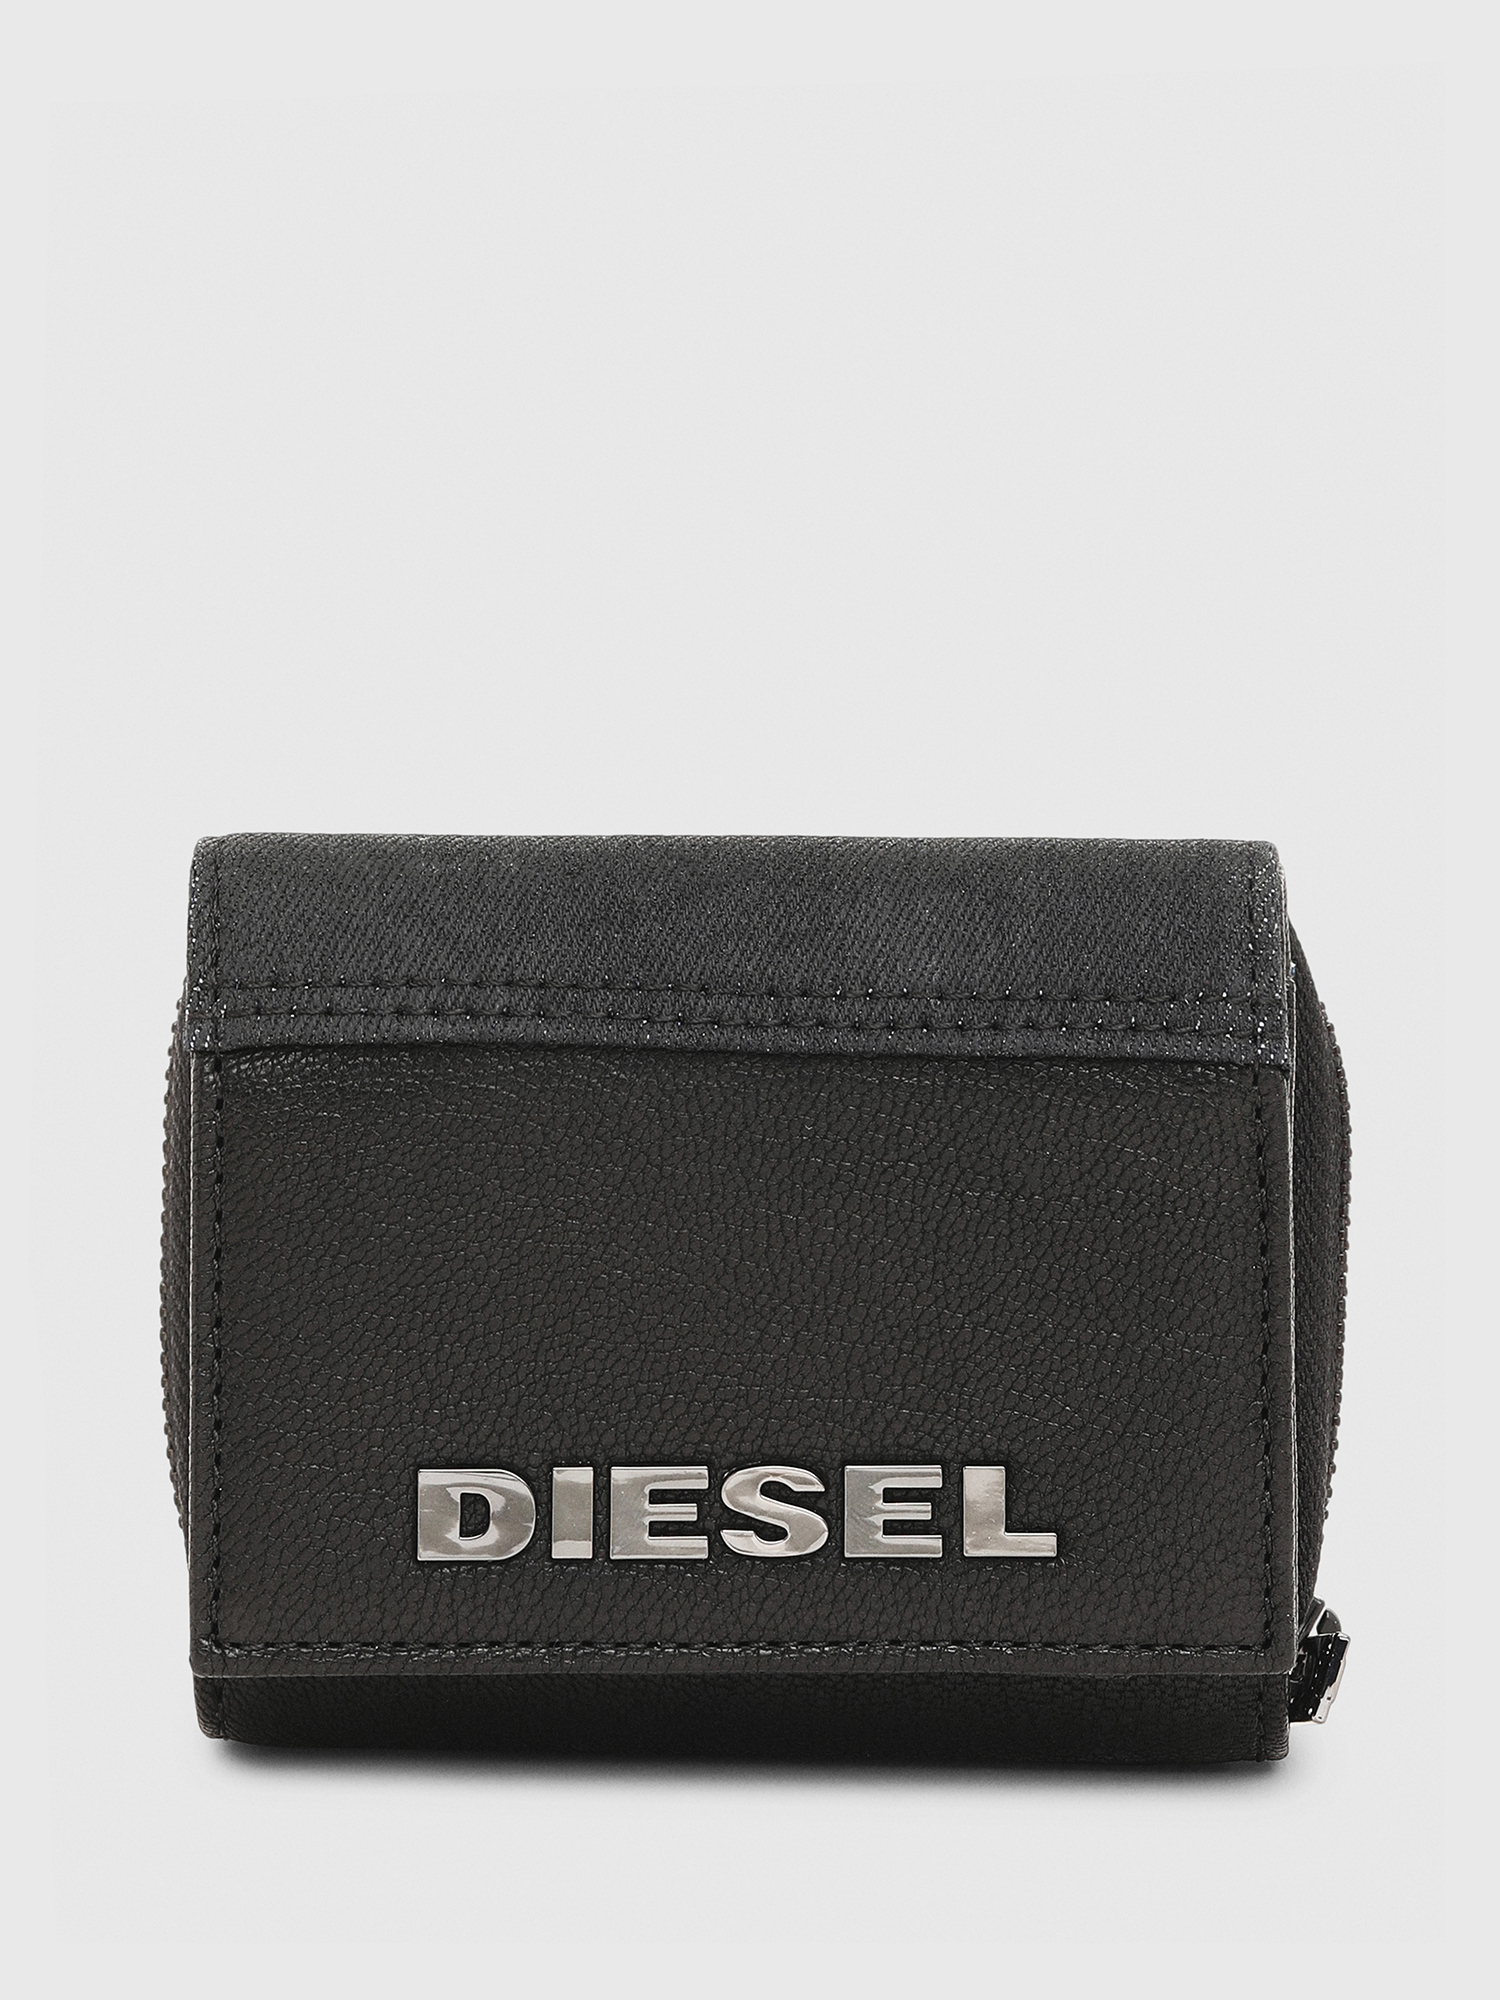 Diesel - SPEJAP, Black - Image 1